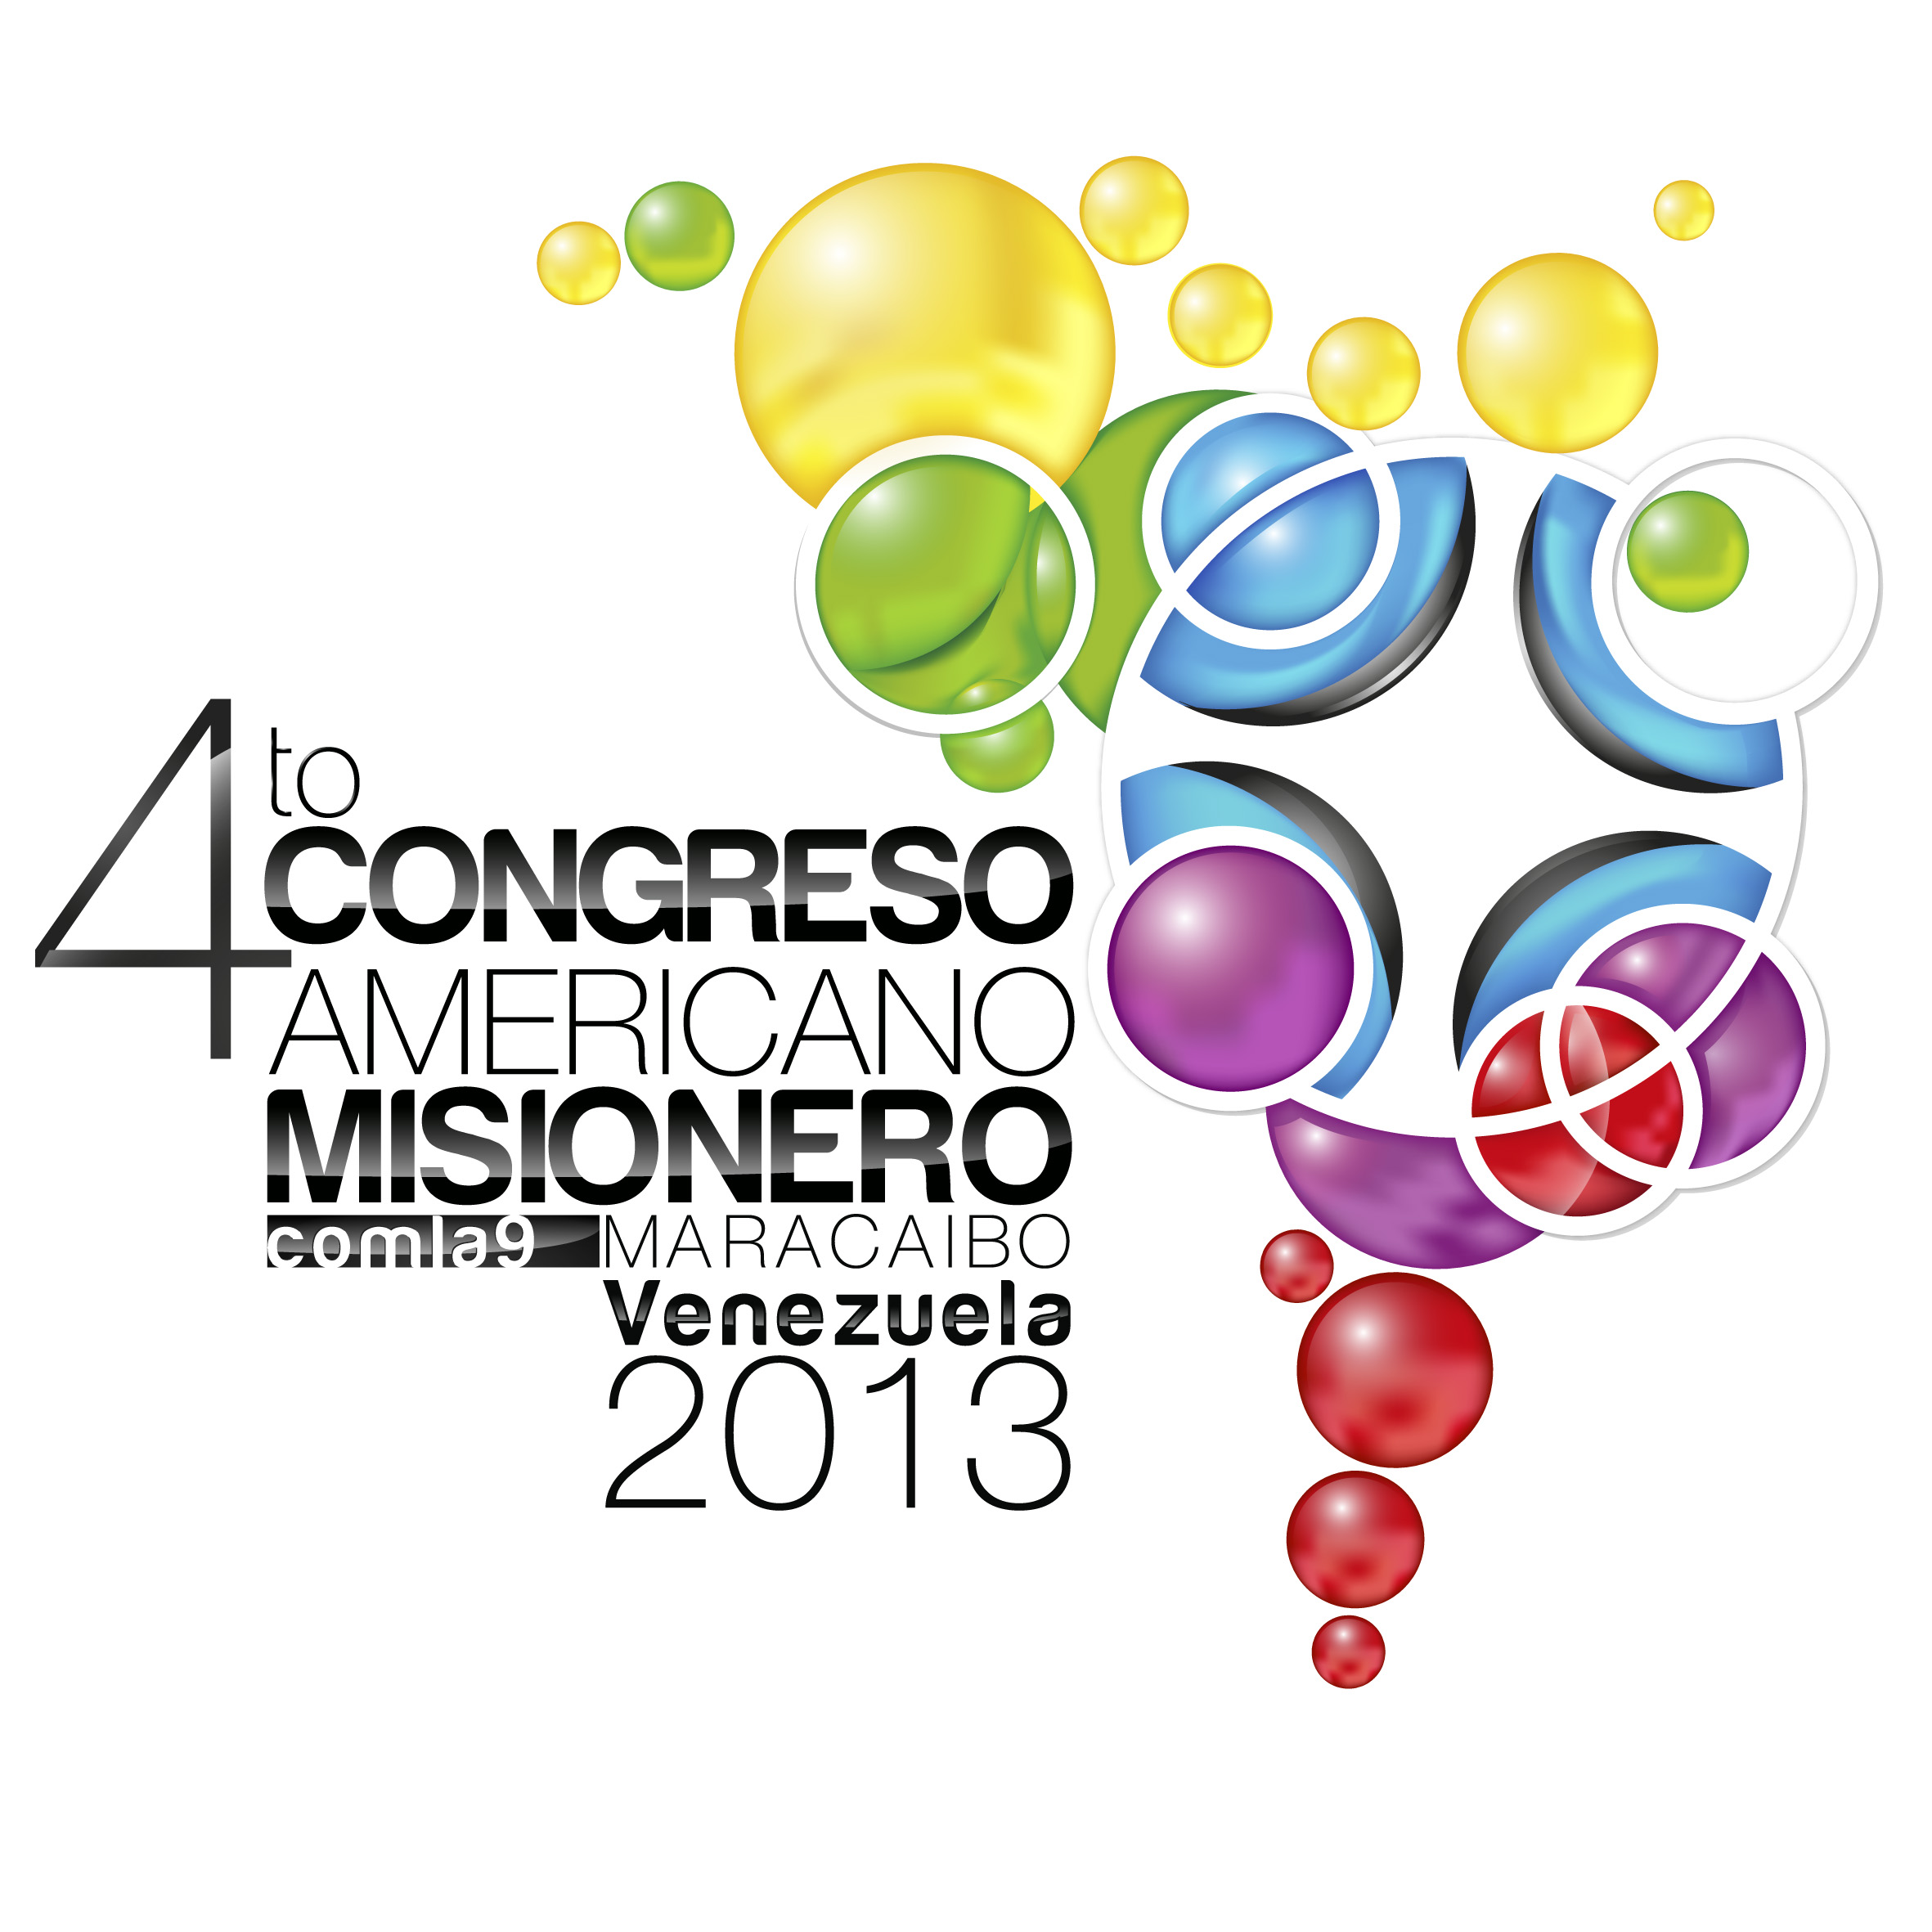 Arquidiocesis Maracaibo Logo photo - 1